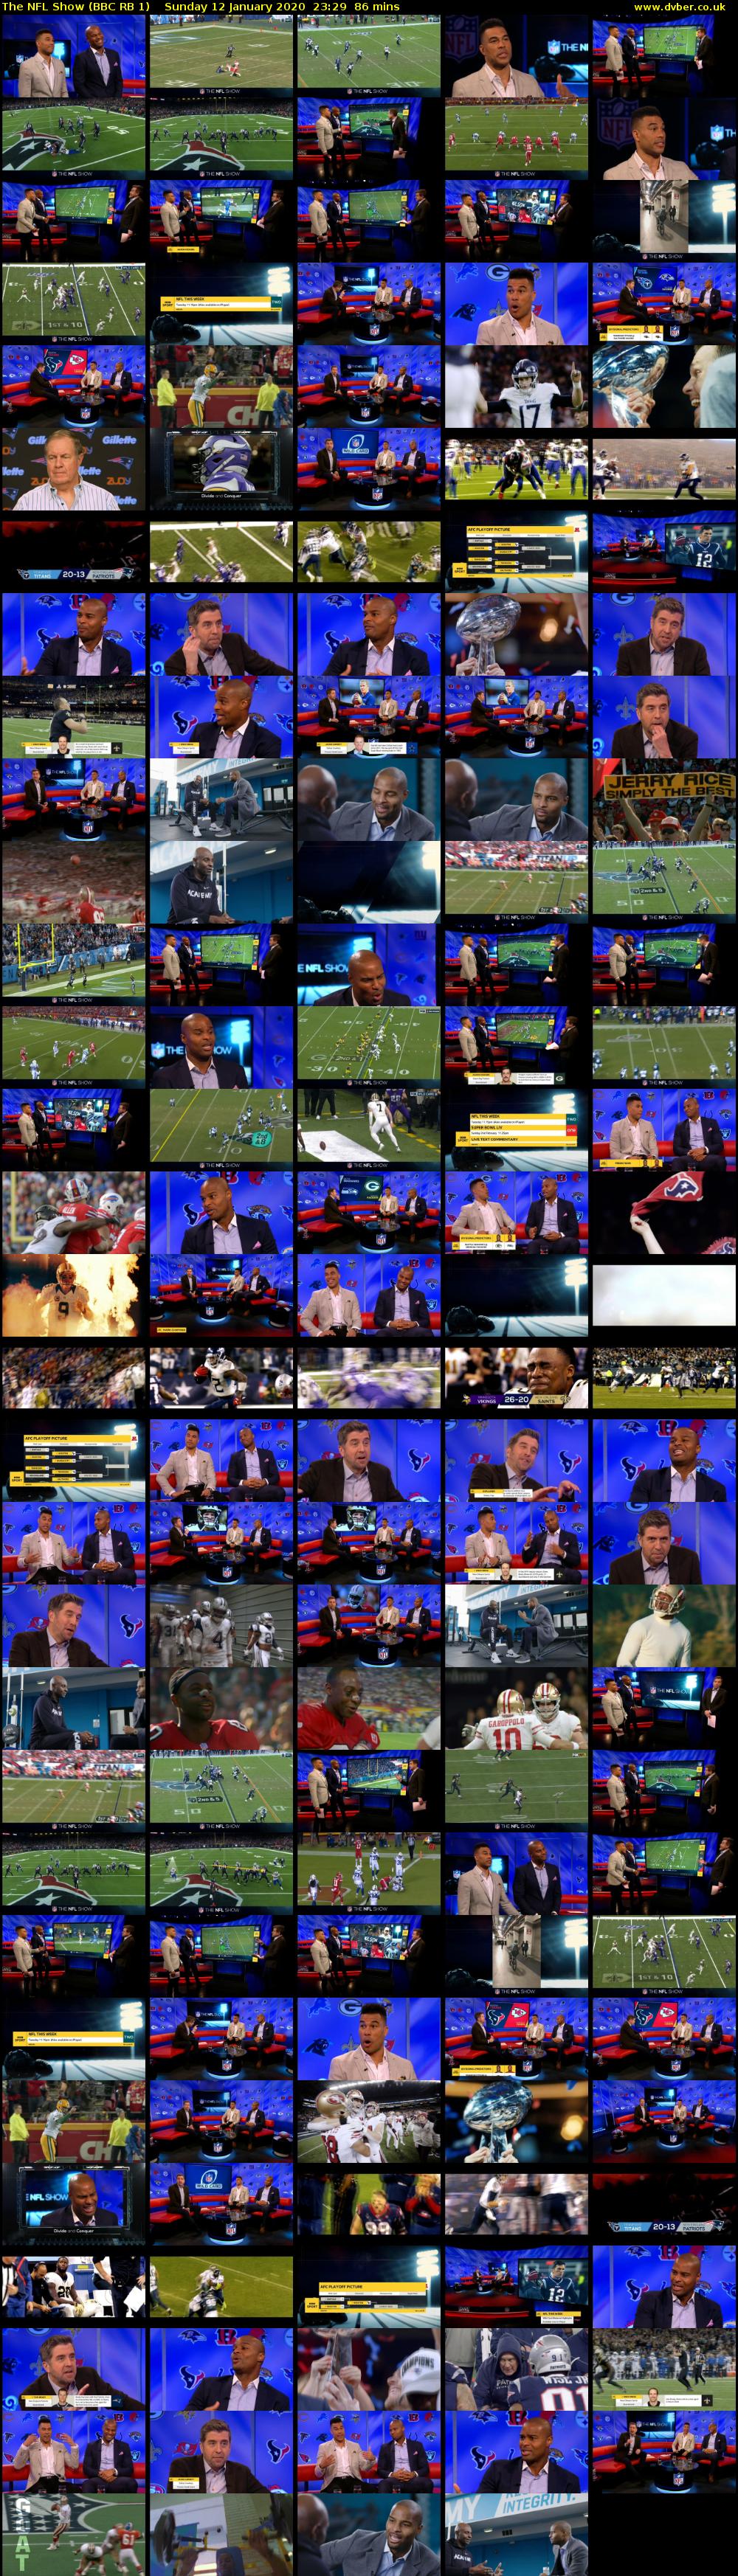 The NFL Show (BBC RB 1) Sunday 12 January 2020 23:29 - 00:55